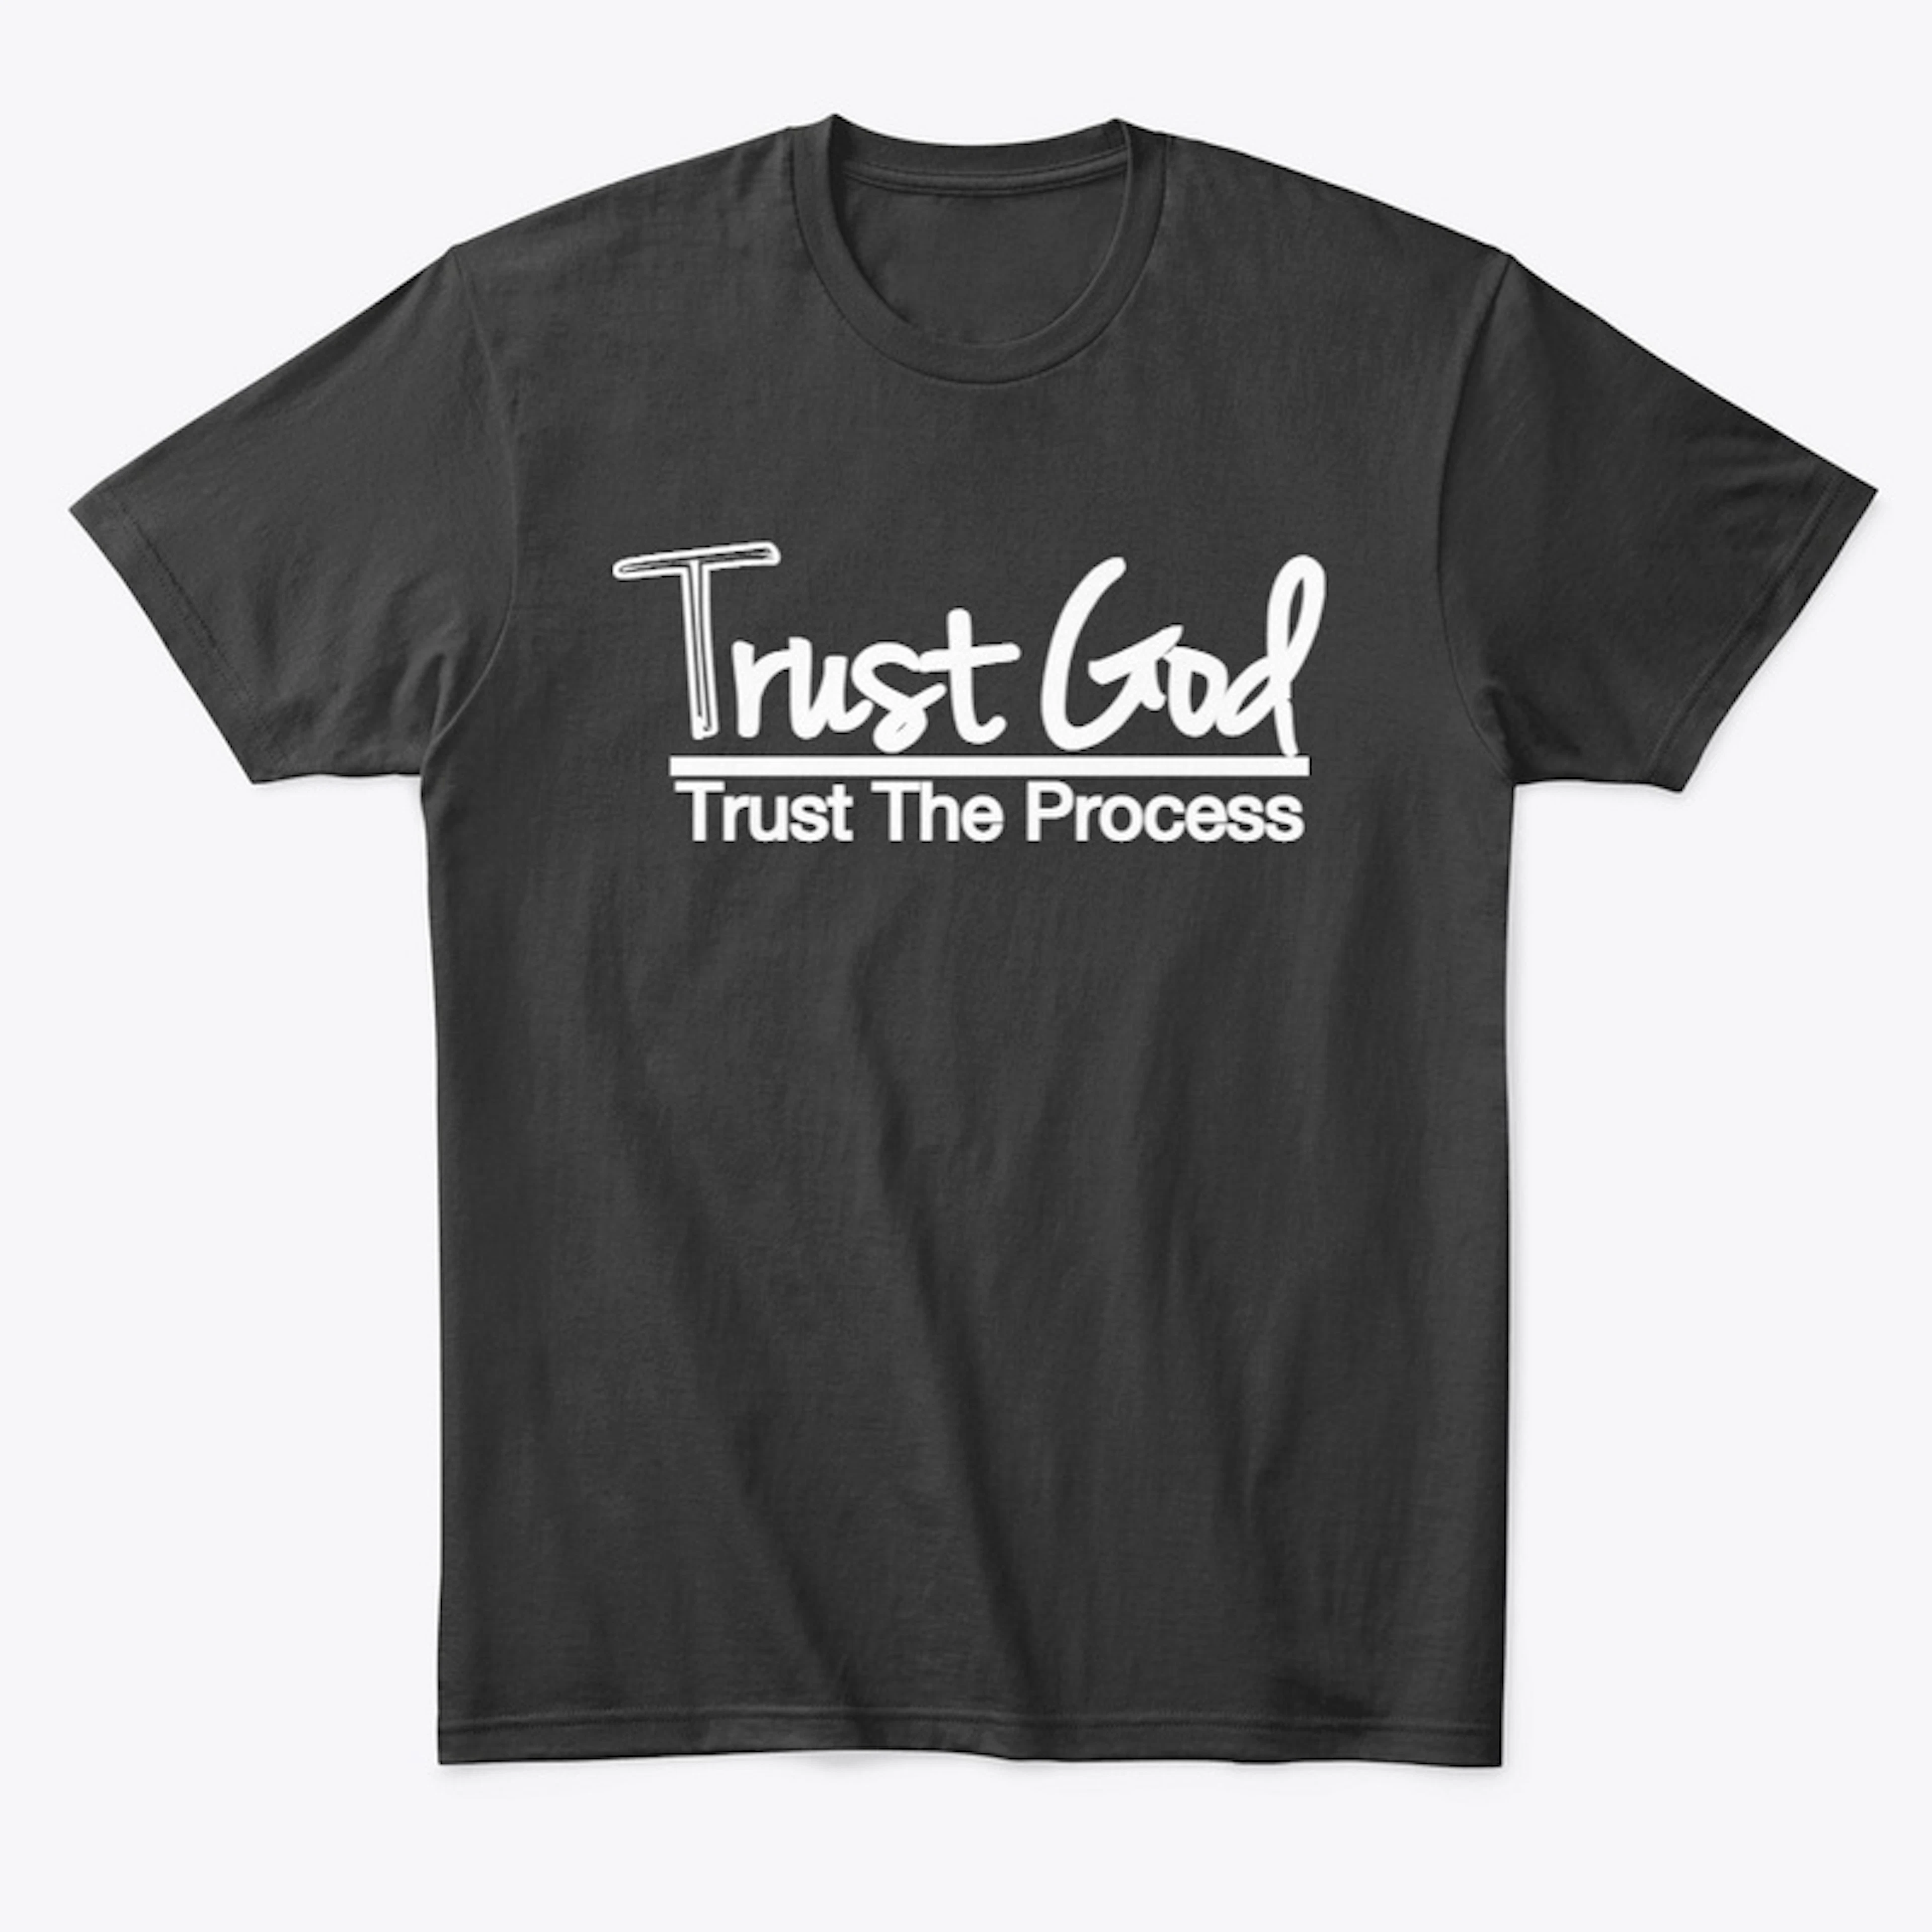 Trust God, Trust The Process.